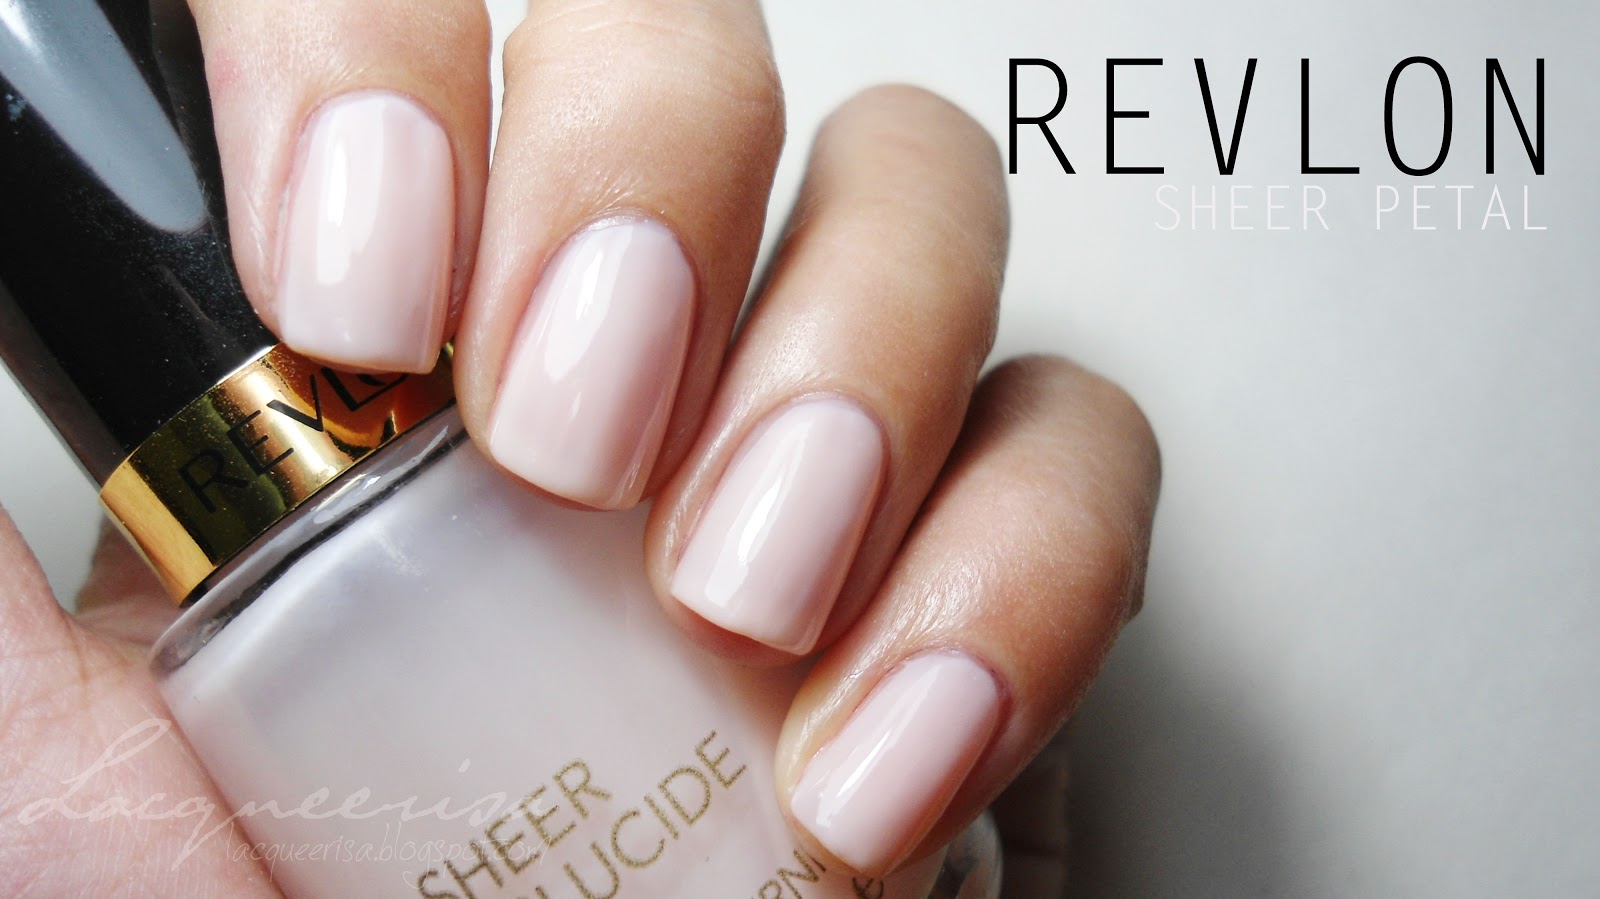 Revlon Sheer Petal Nail Polish - wide 10